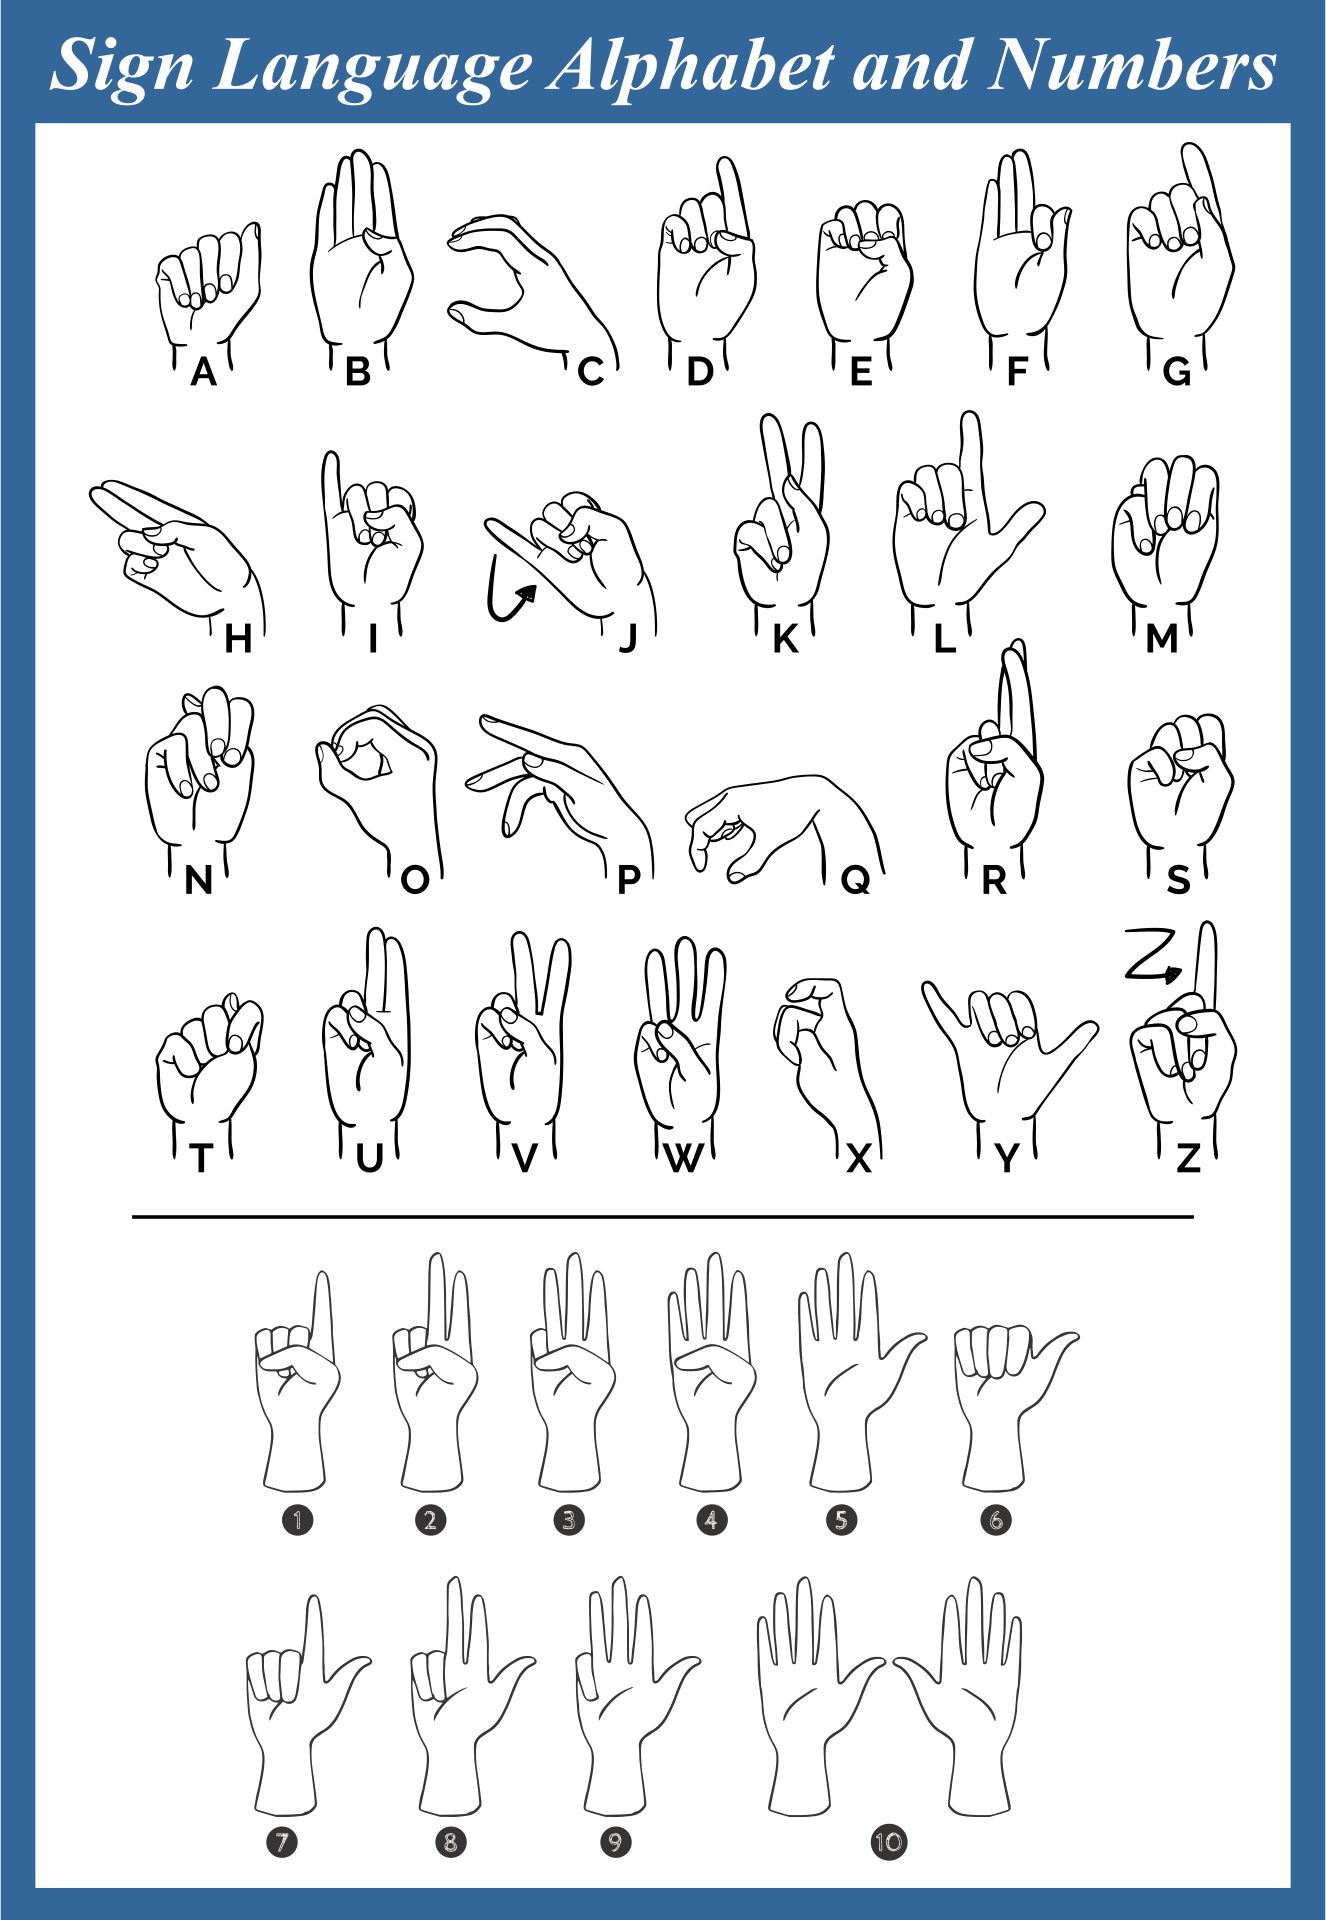 5-best-images-of-sign-language-numbers-1-100-chart-printables-asl-numbers-1-100-printable-bmp